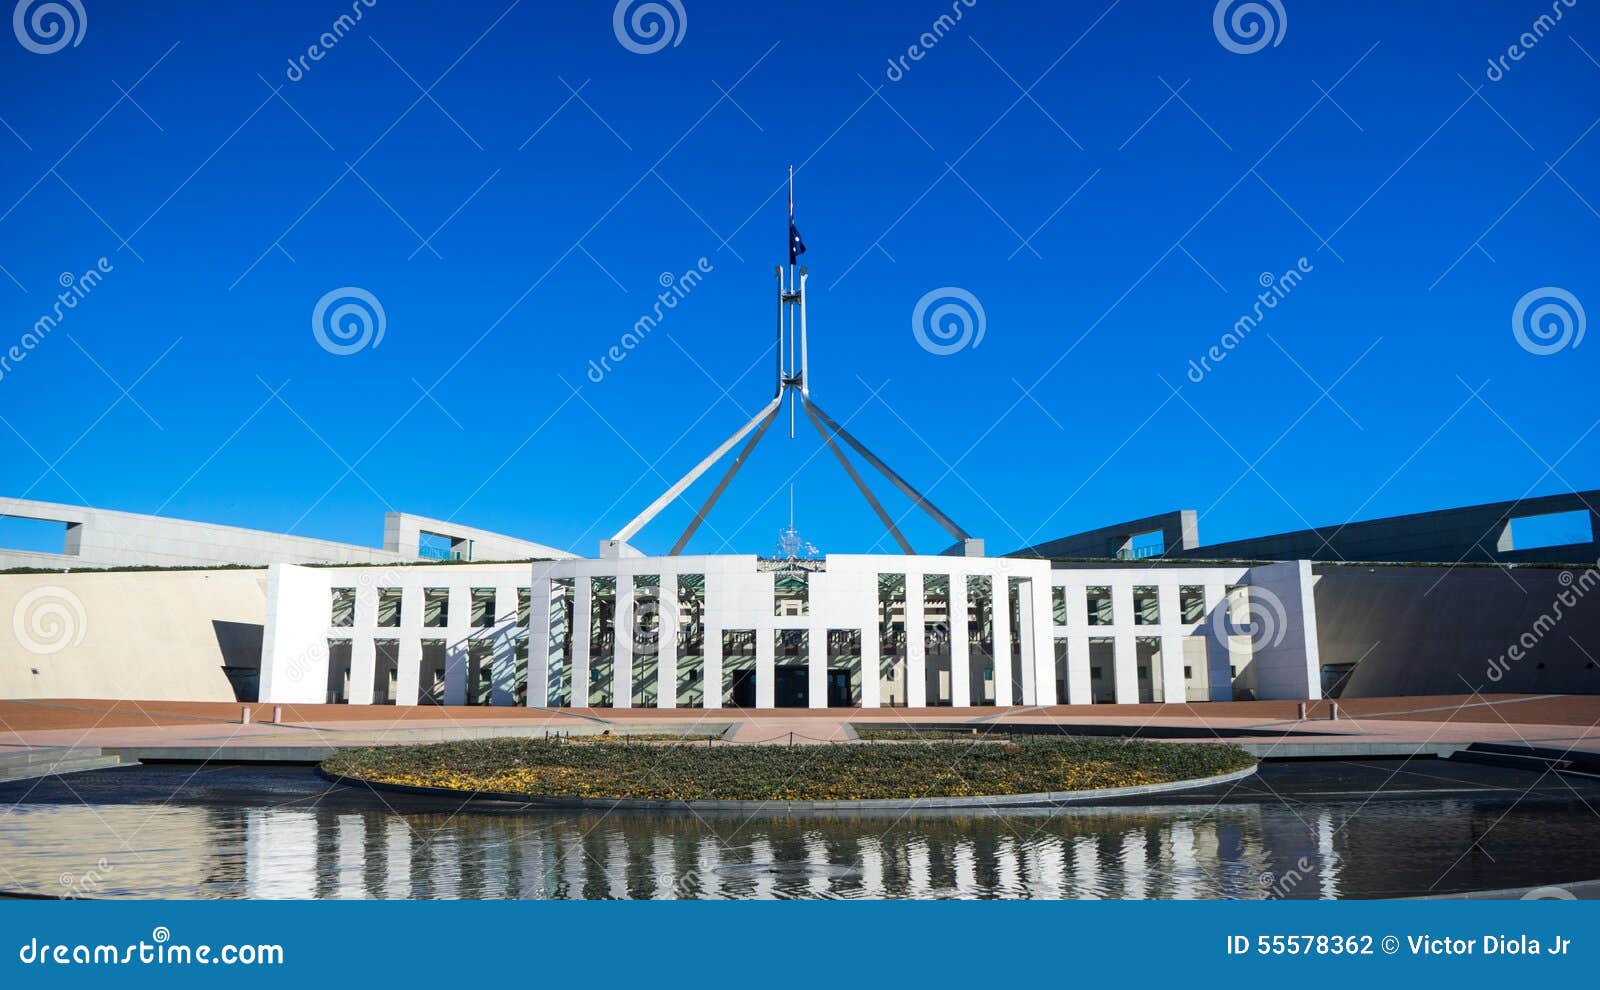 the parliament house of australia